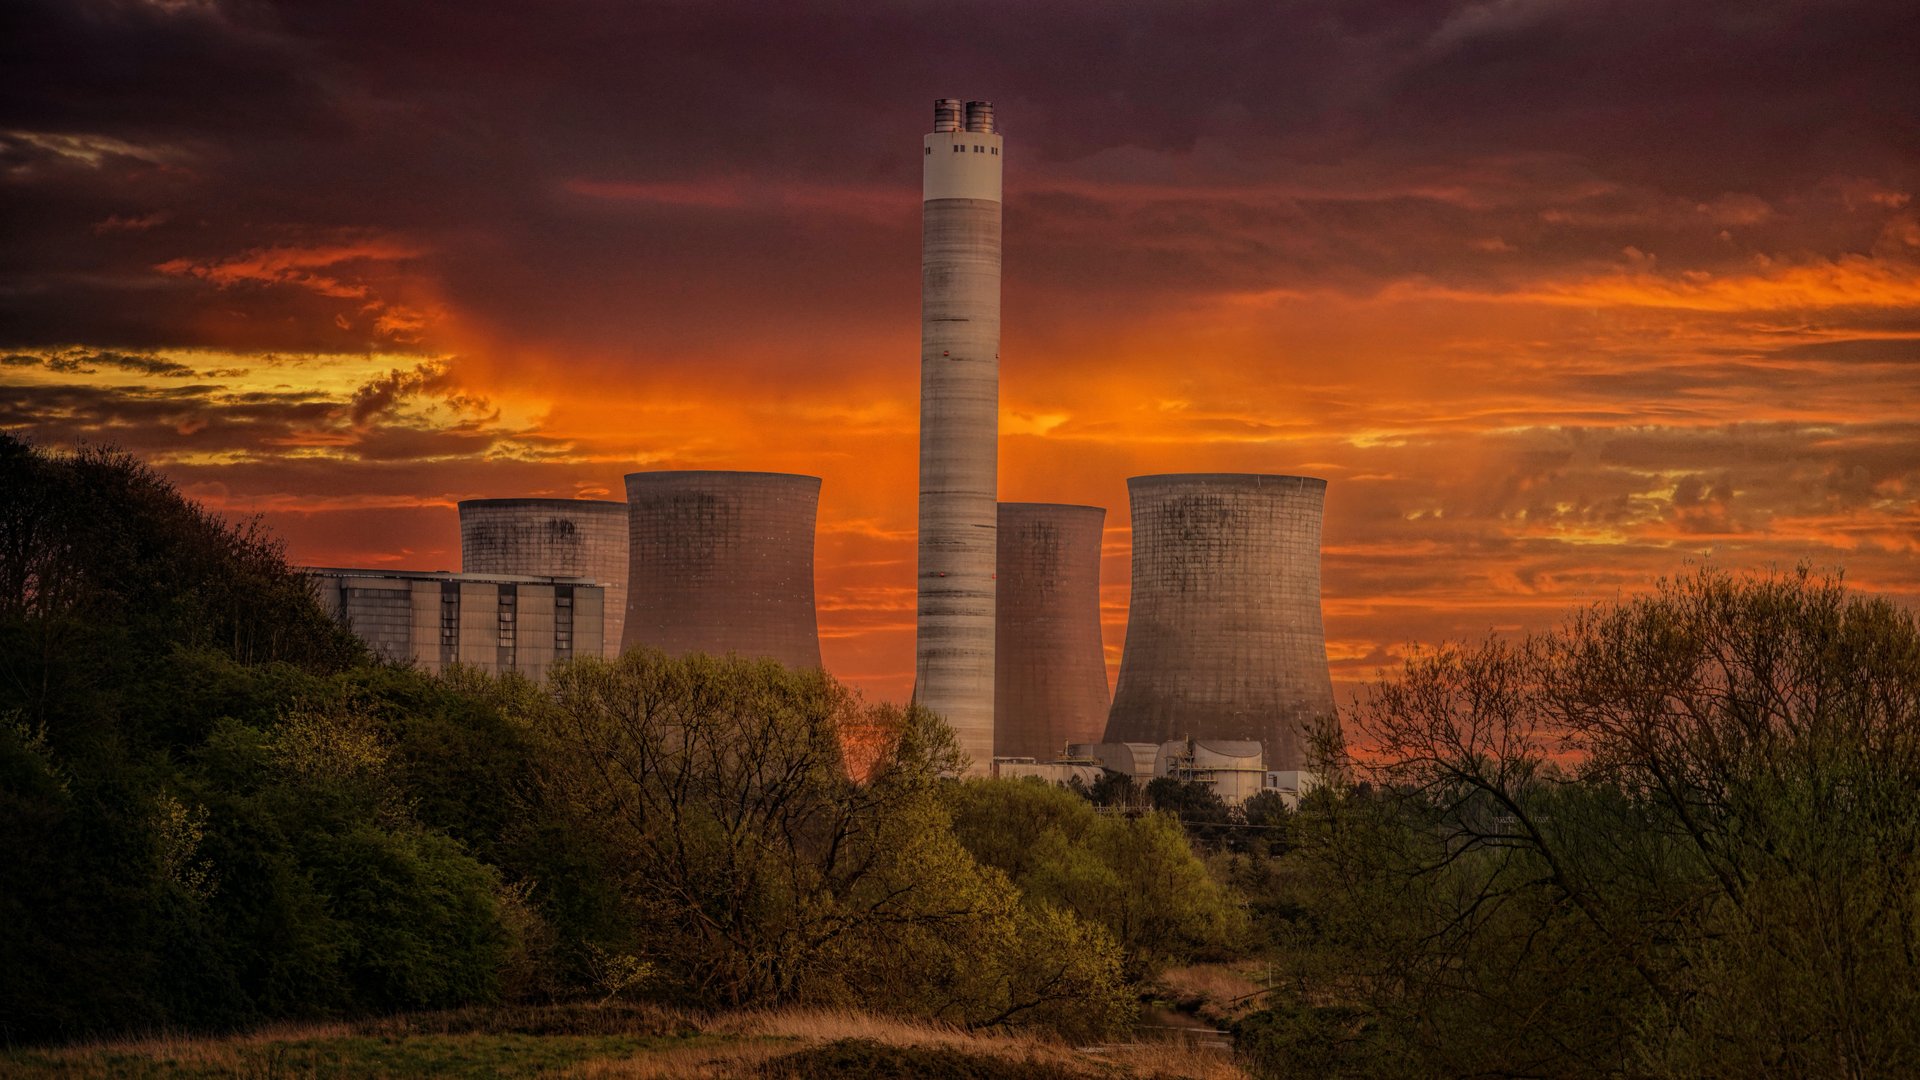 Weißes Kernkraftwerkssilo Unter Orangeem Himmel Bei Sonnenuntergang